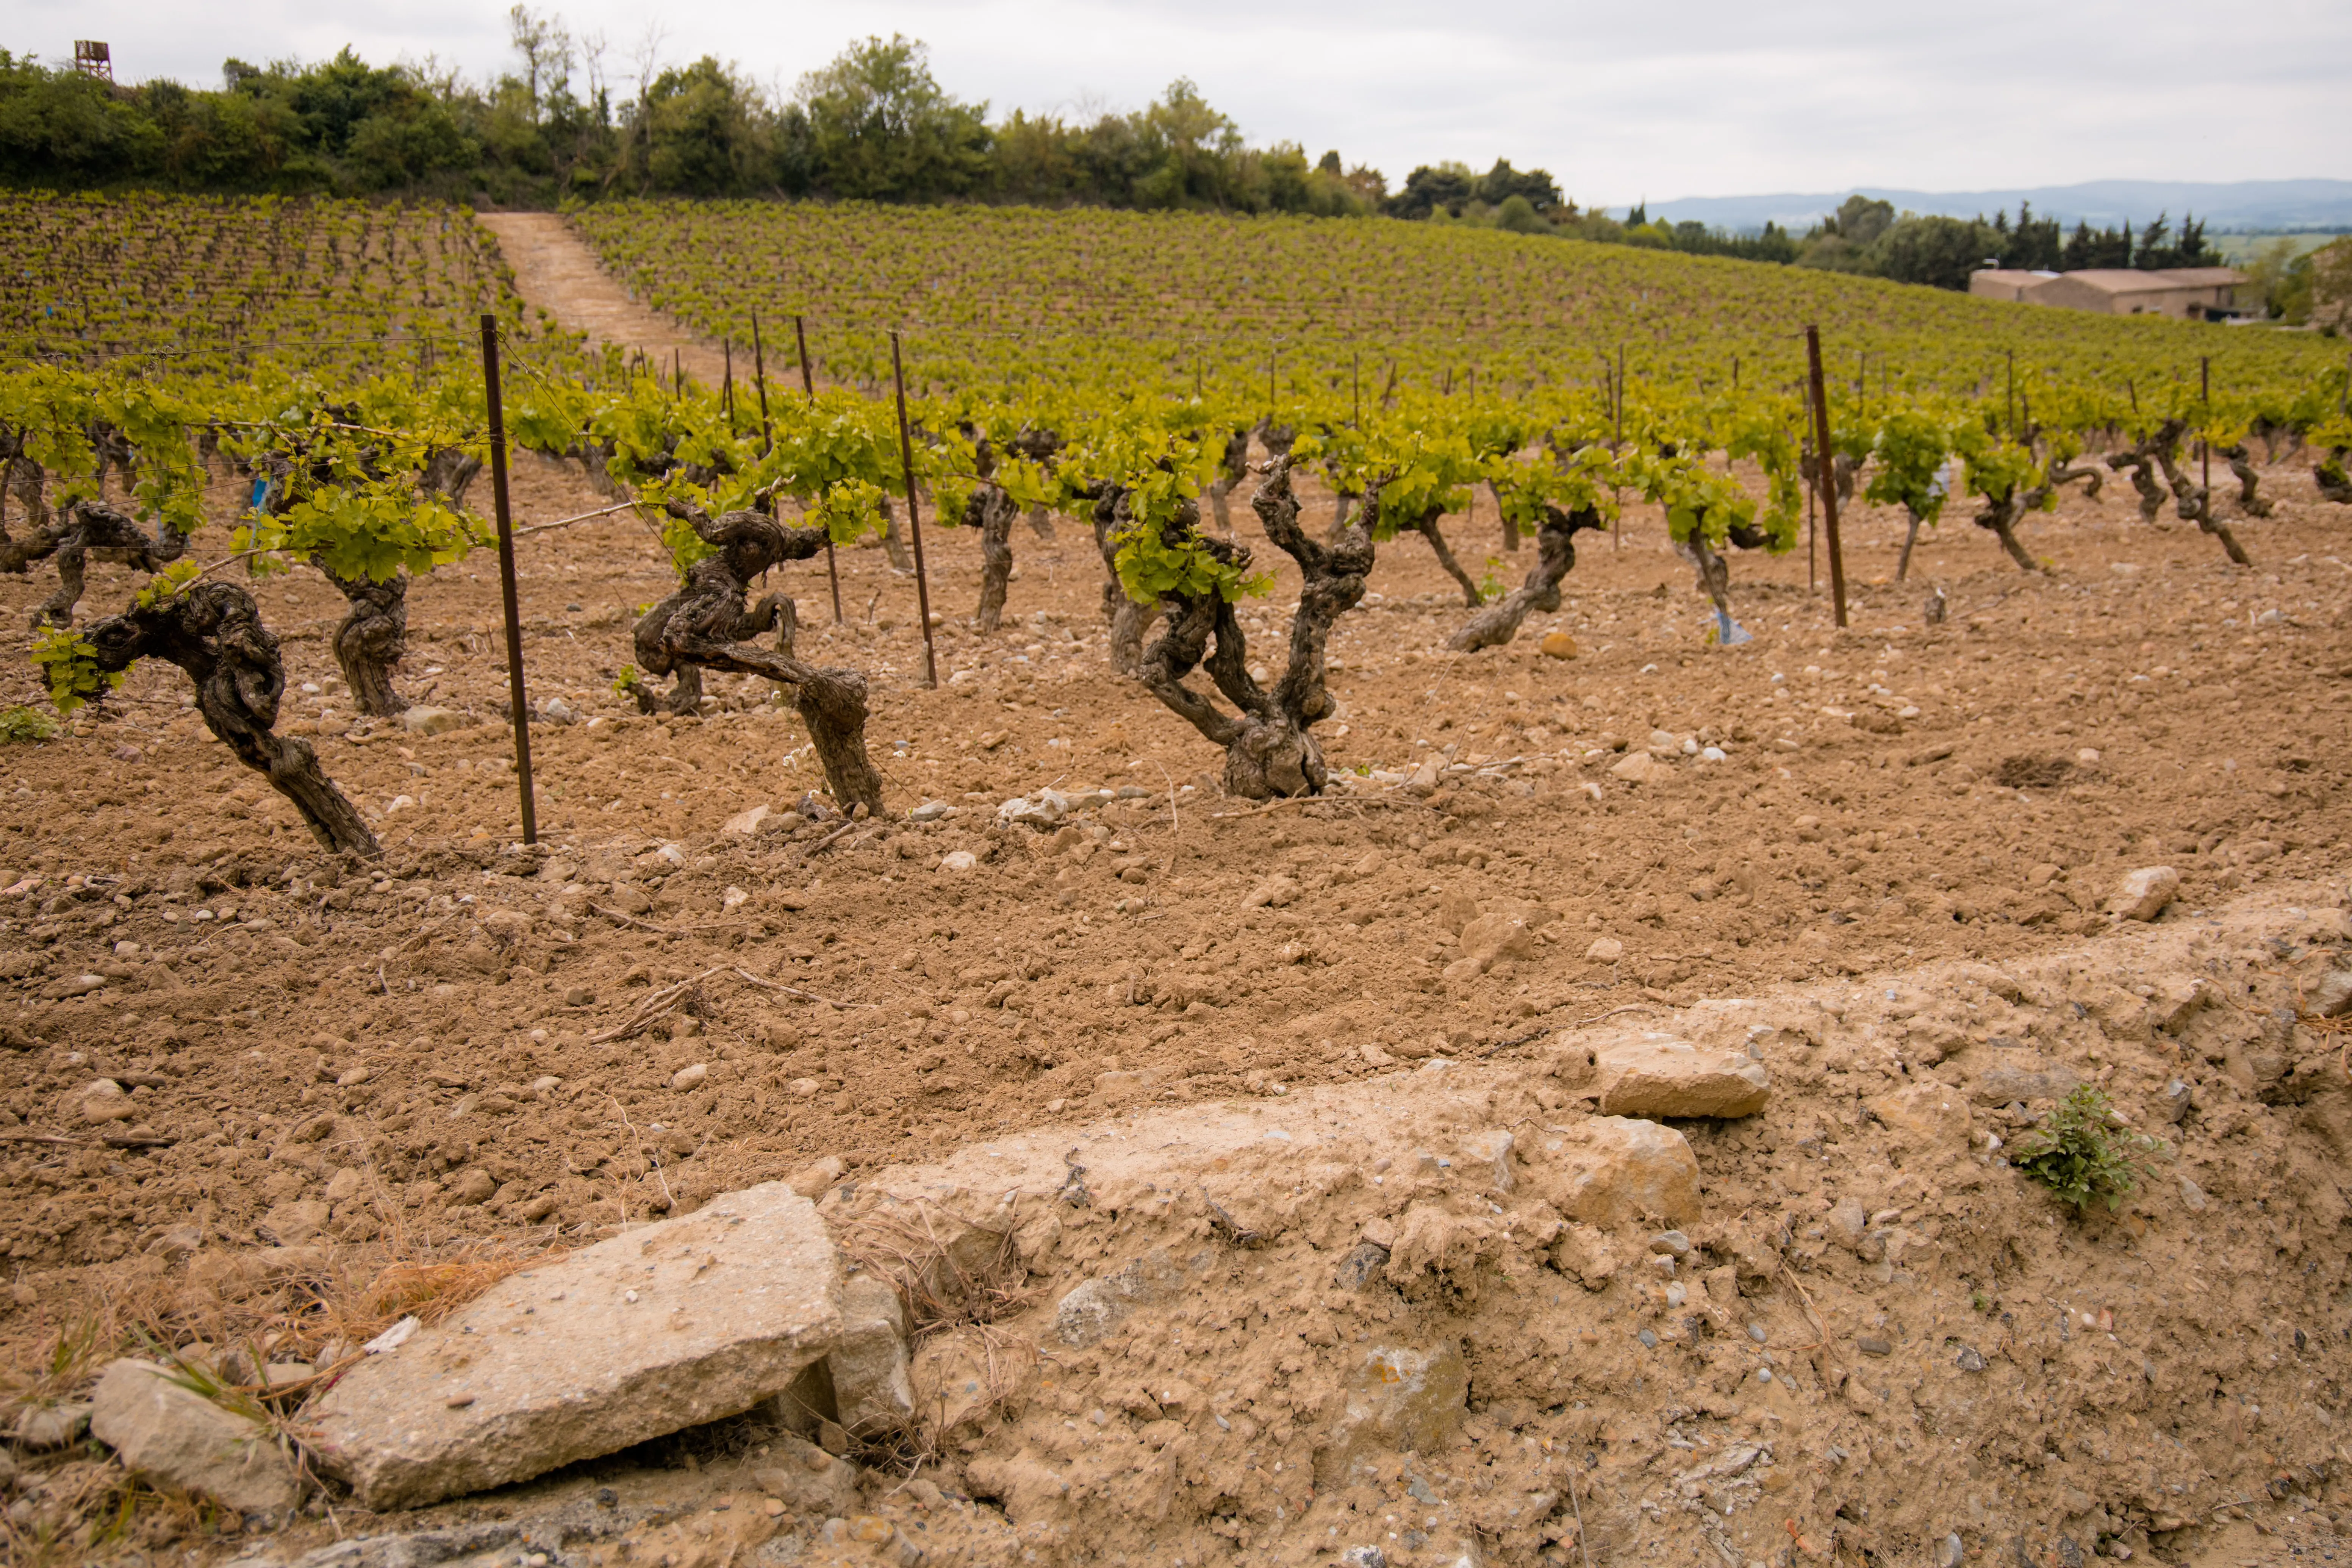 Vineyard in Carcassonne, France